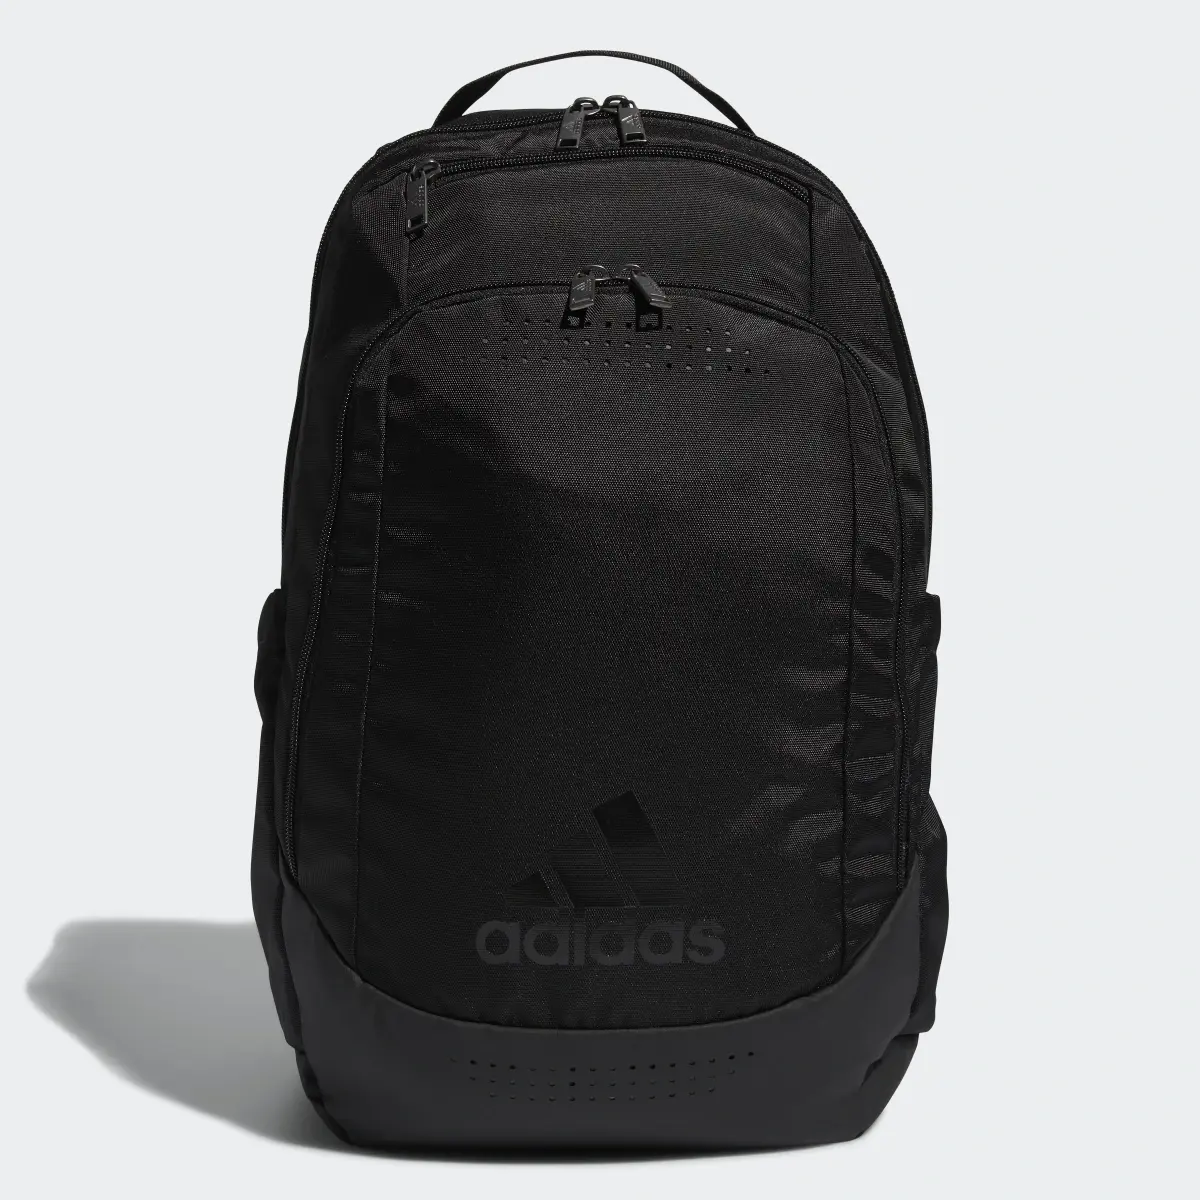 Adidas Defender Team Backpack. 1